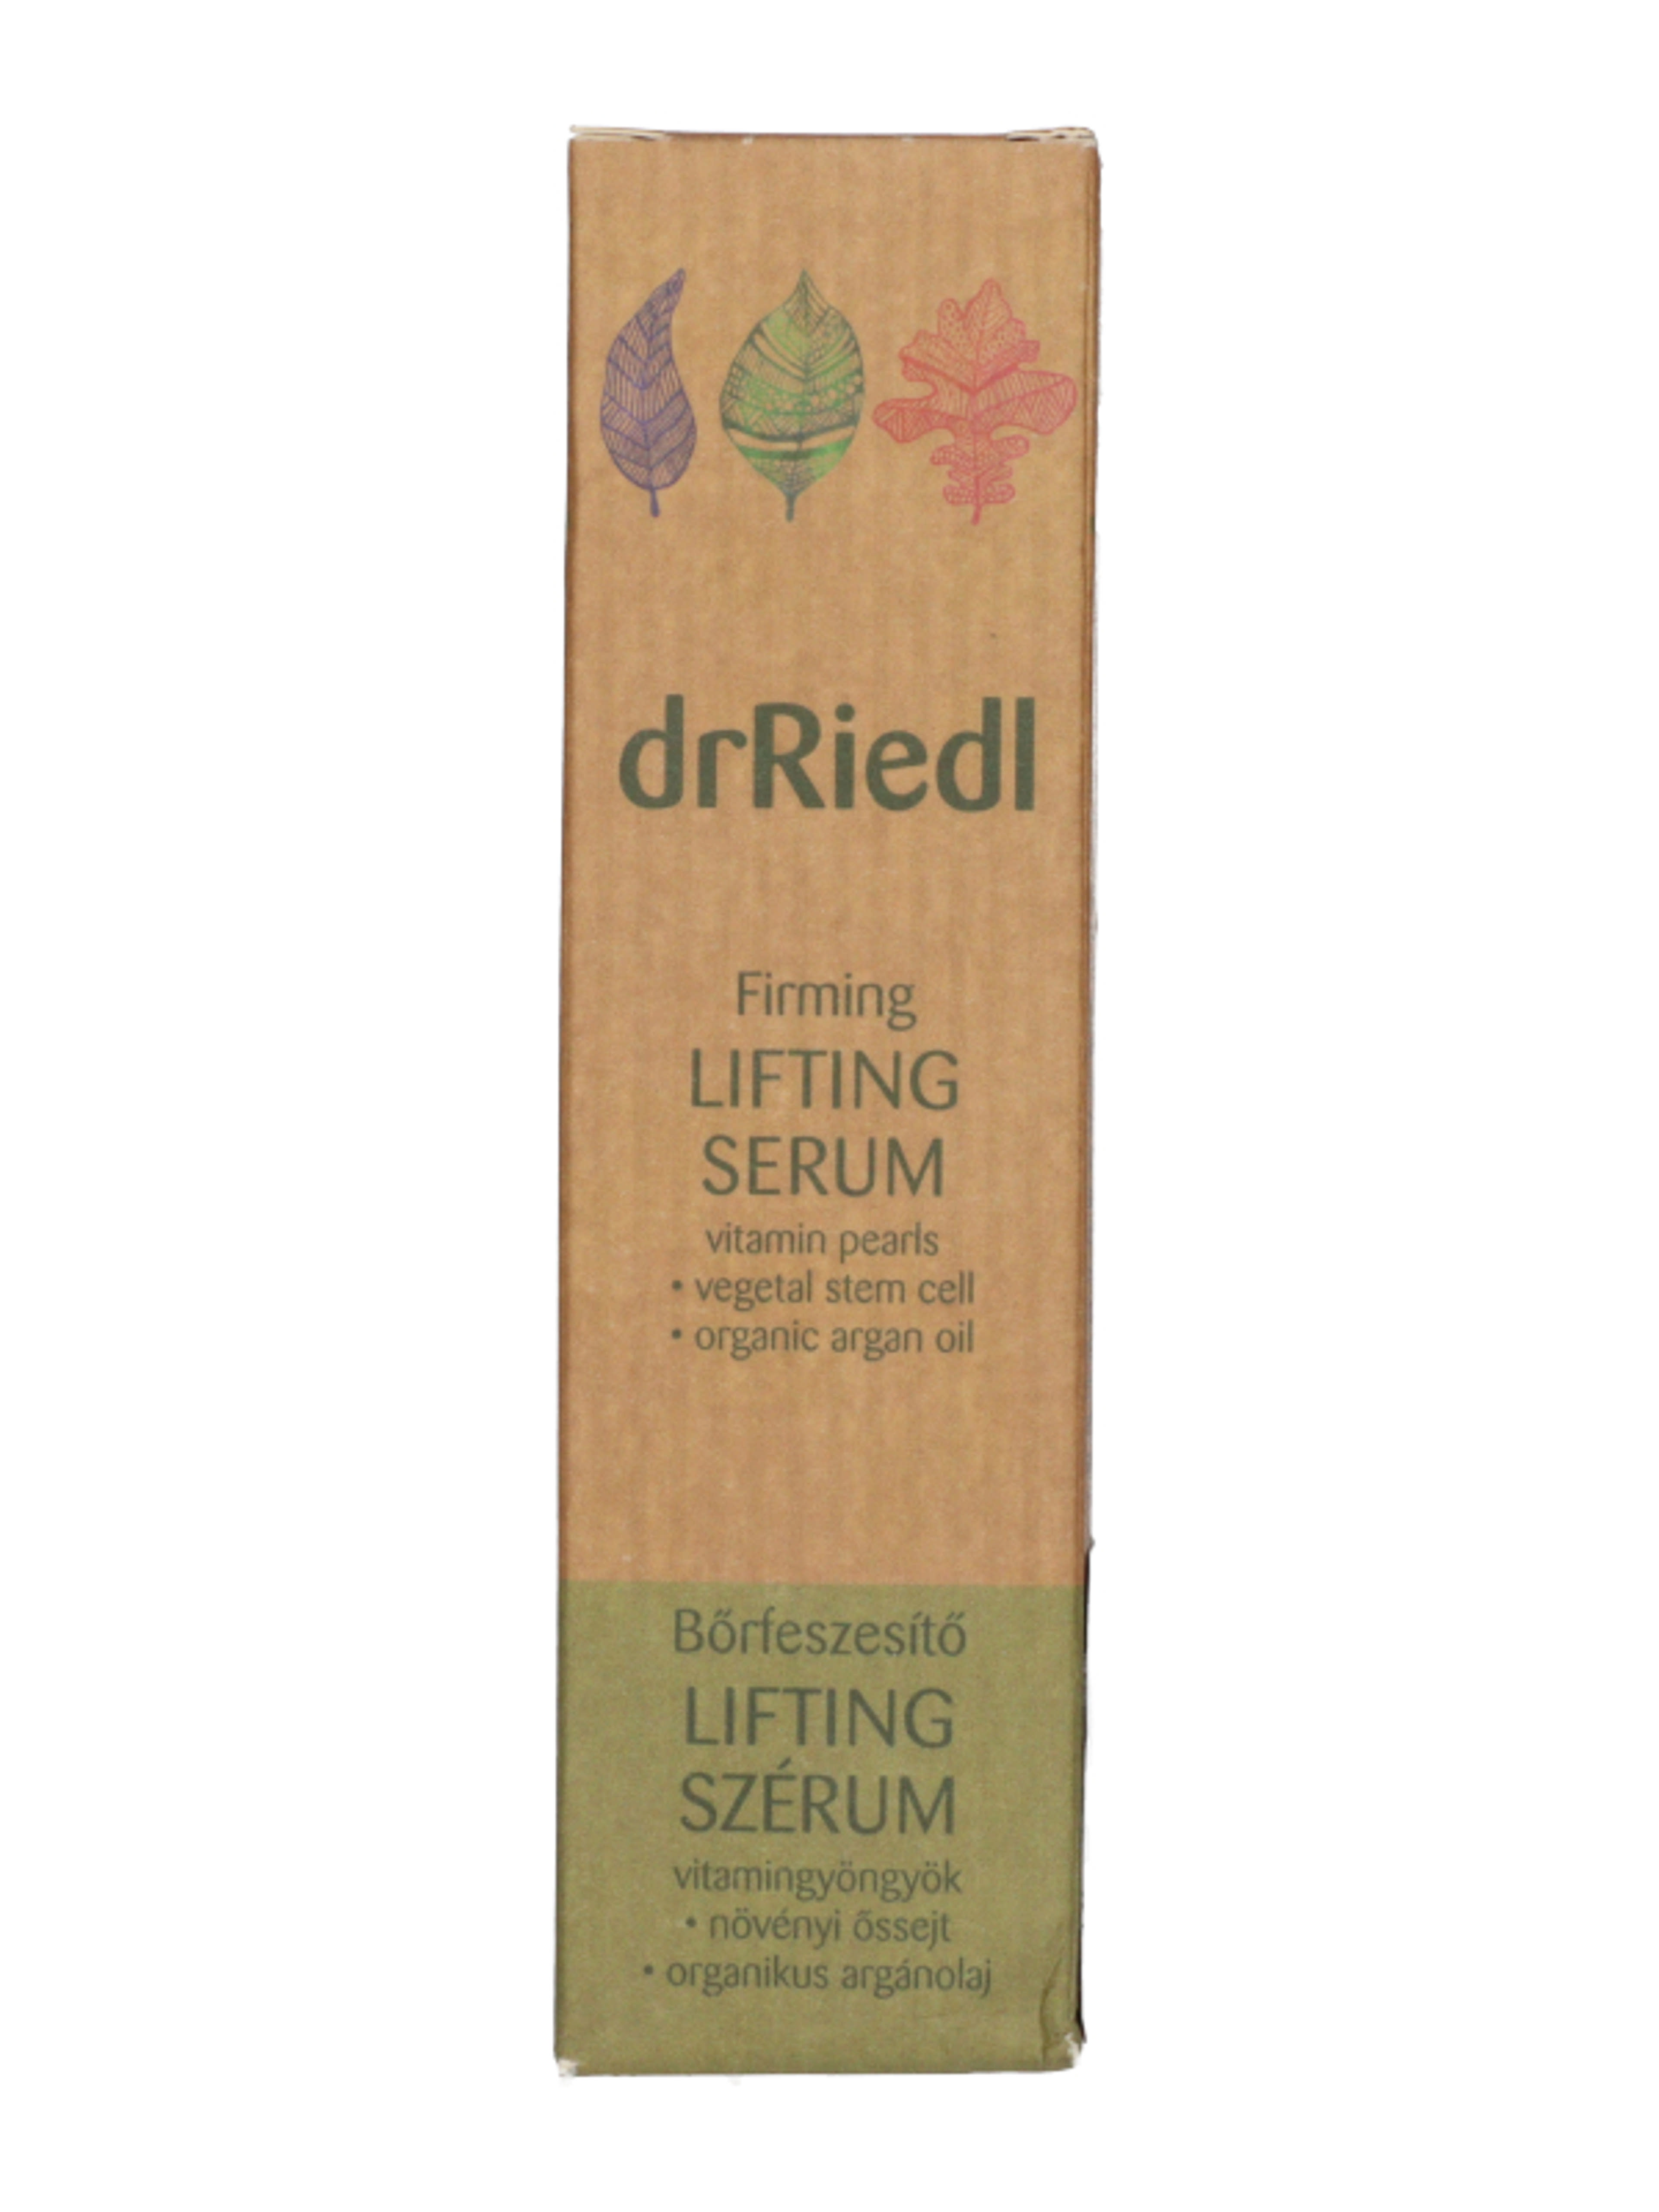 drRiedl Lifting bőrfeszesítő szérum - 30 ml